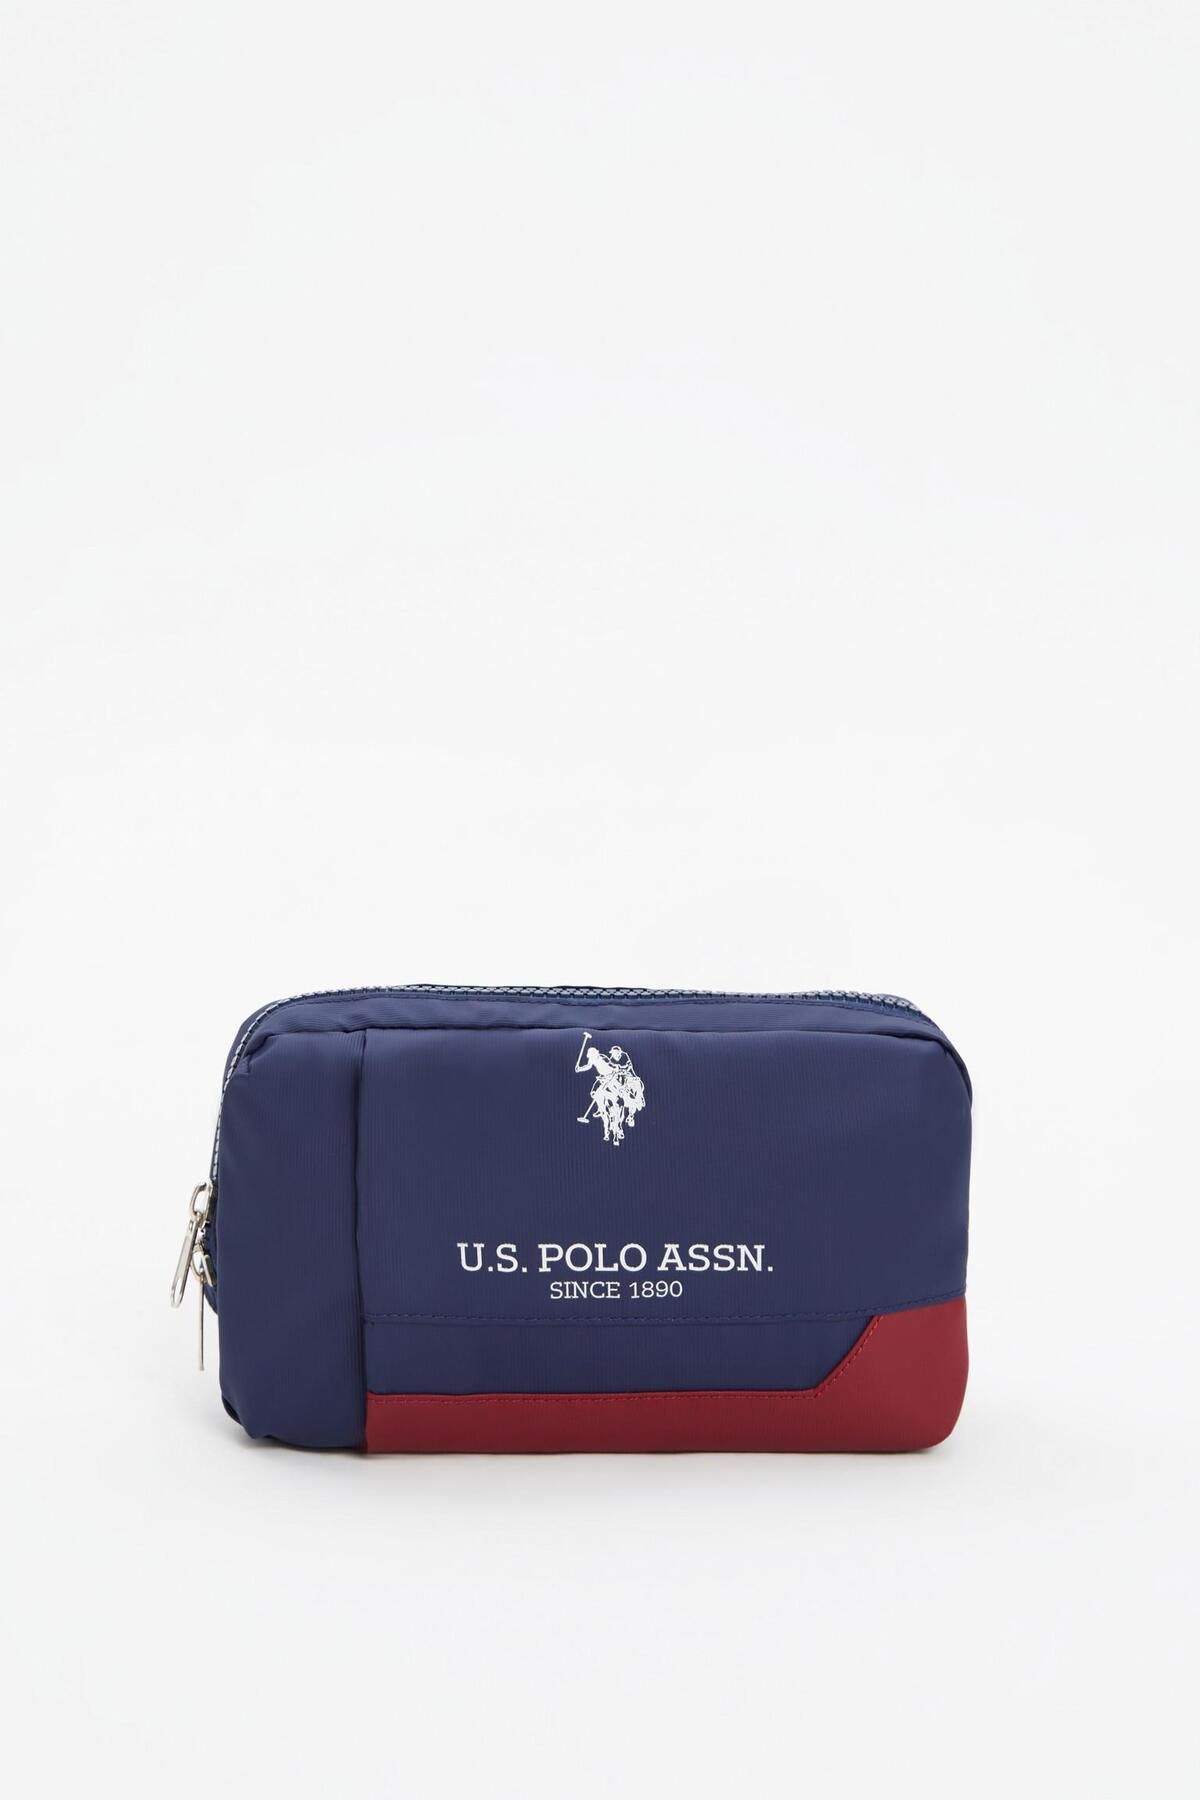 U.S. Polo Assn. U.S. POLO ASSN. PLEVR23612 Lacivert Erkek Bel Çantası